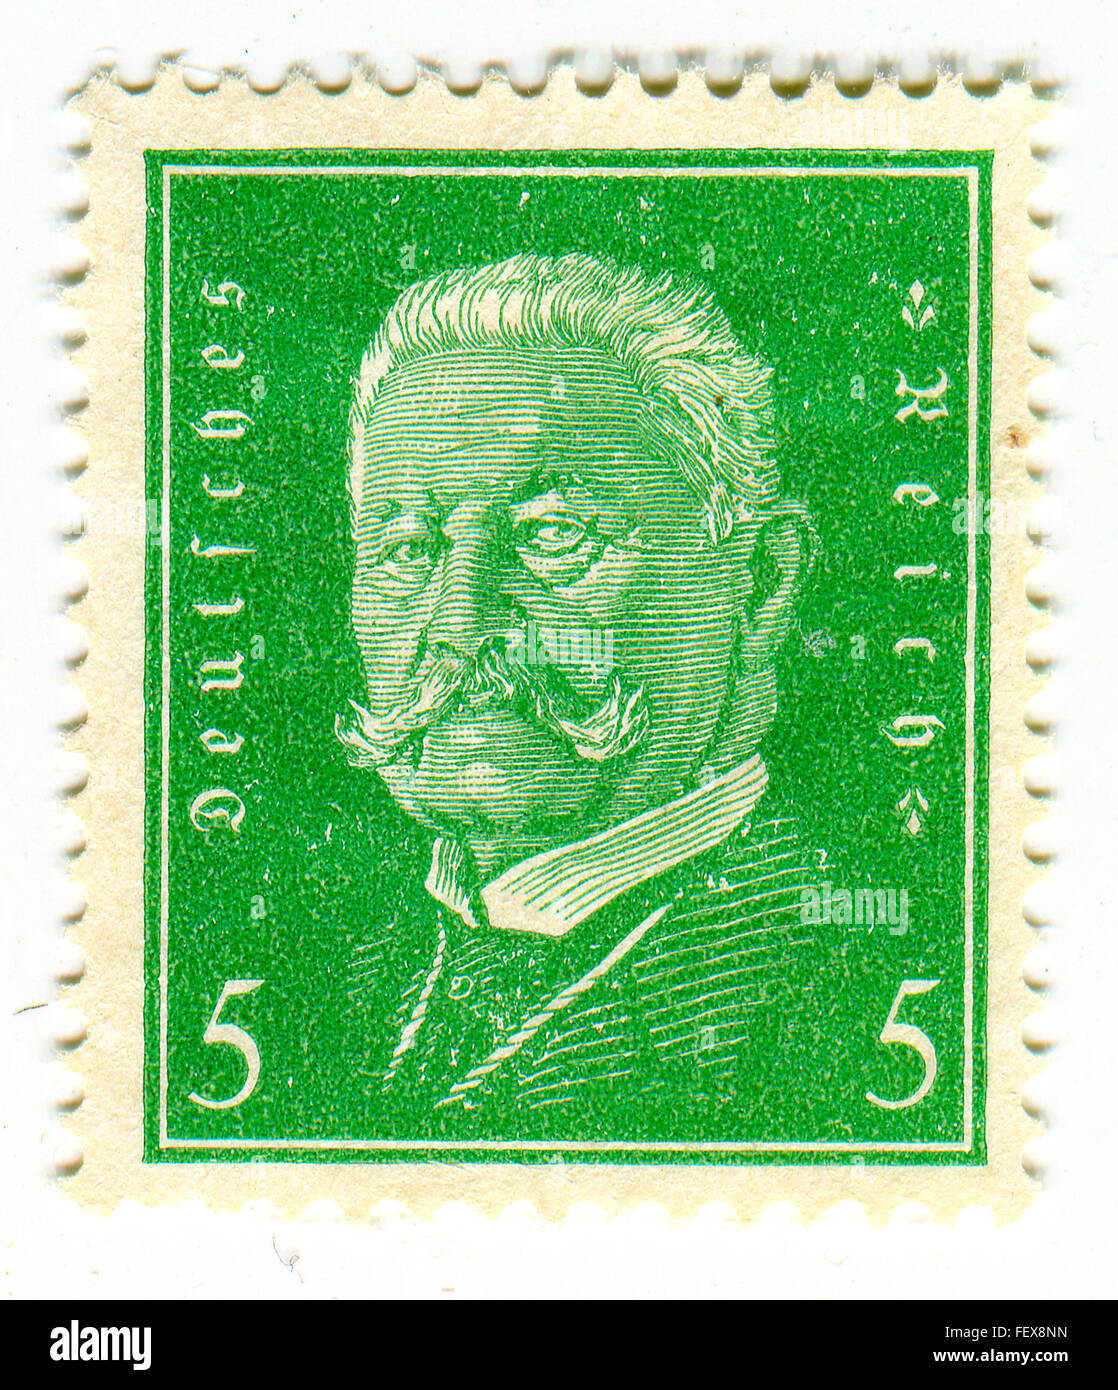 GOMEL,BELARUS - FEBRUARY 2016: A stamp printed in Germany shows image of the Paul Ludwig Hans Anton von Beneckendorff und von Hi Stock Photo